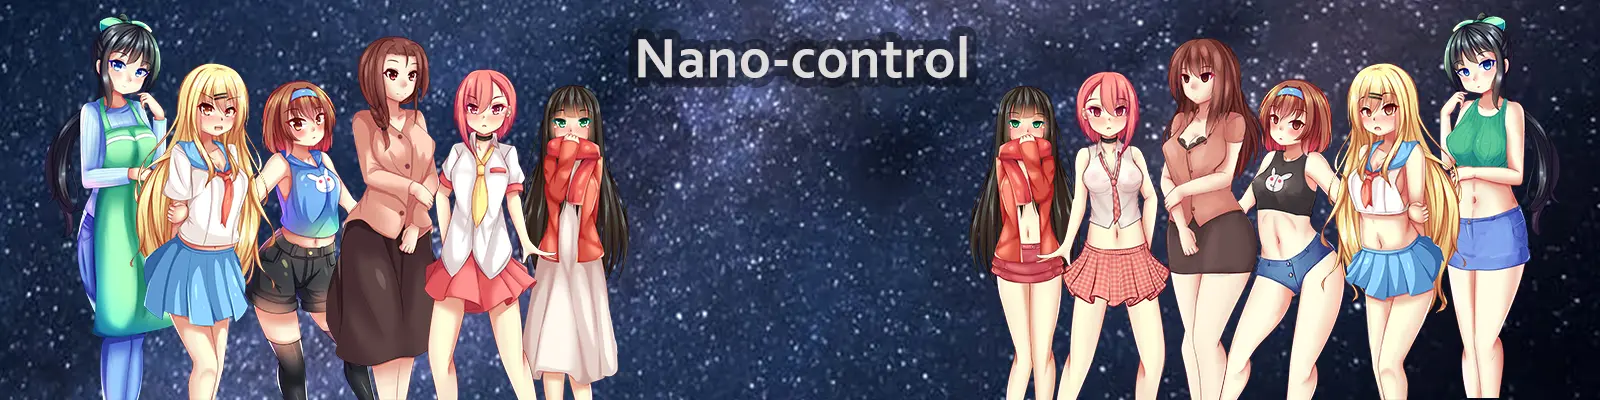 Nano-control [v0.28b] main image